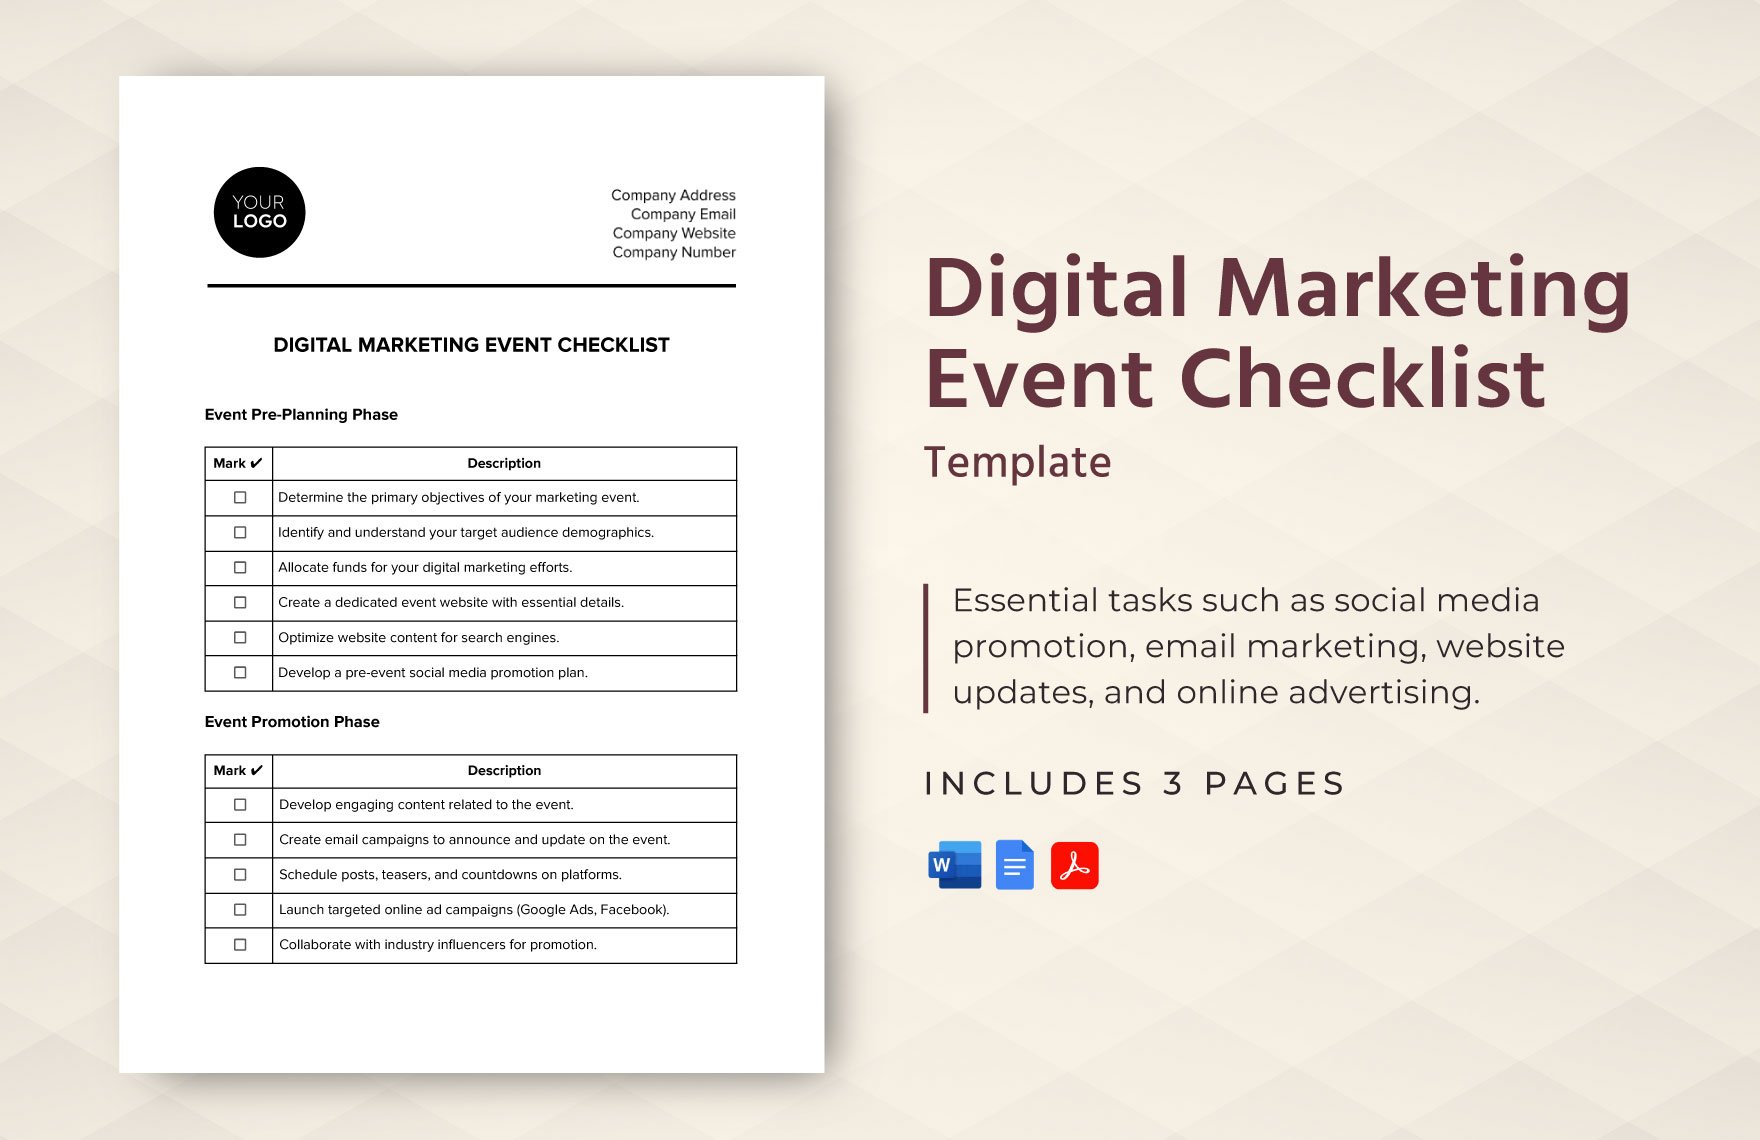 Digital Marketing Event Checklist Template